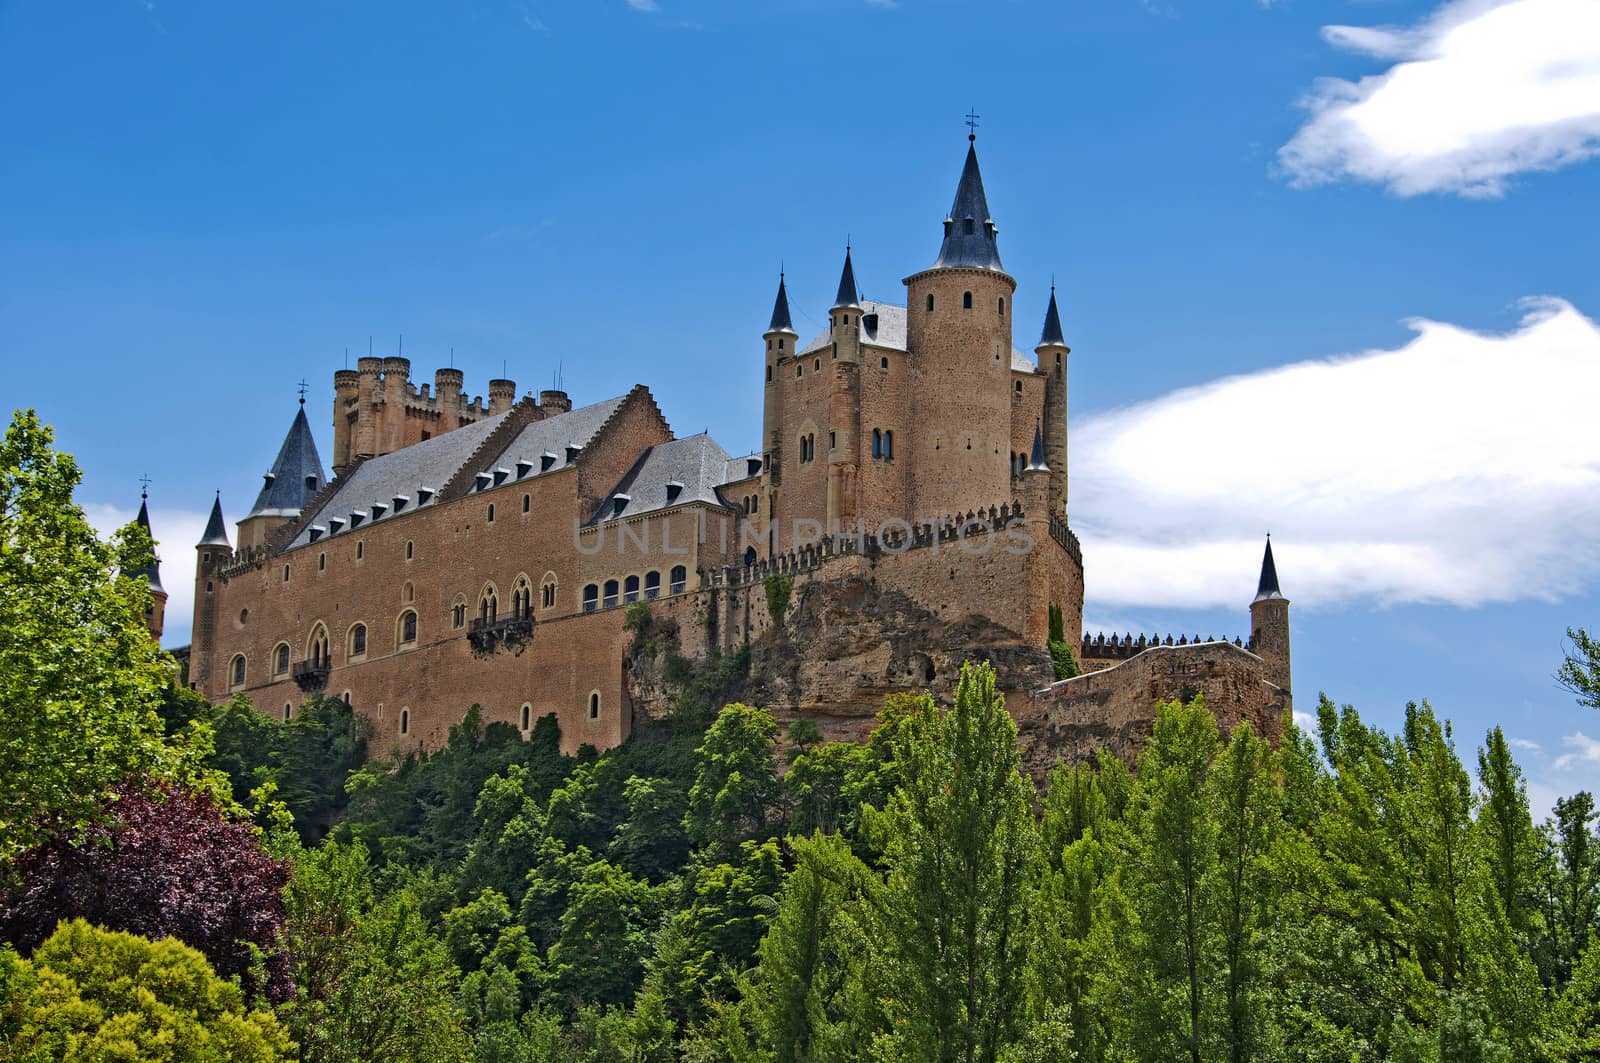 Alcazar of Segovia by sssanchez